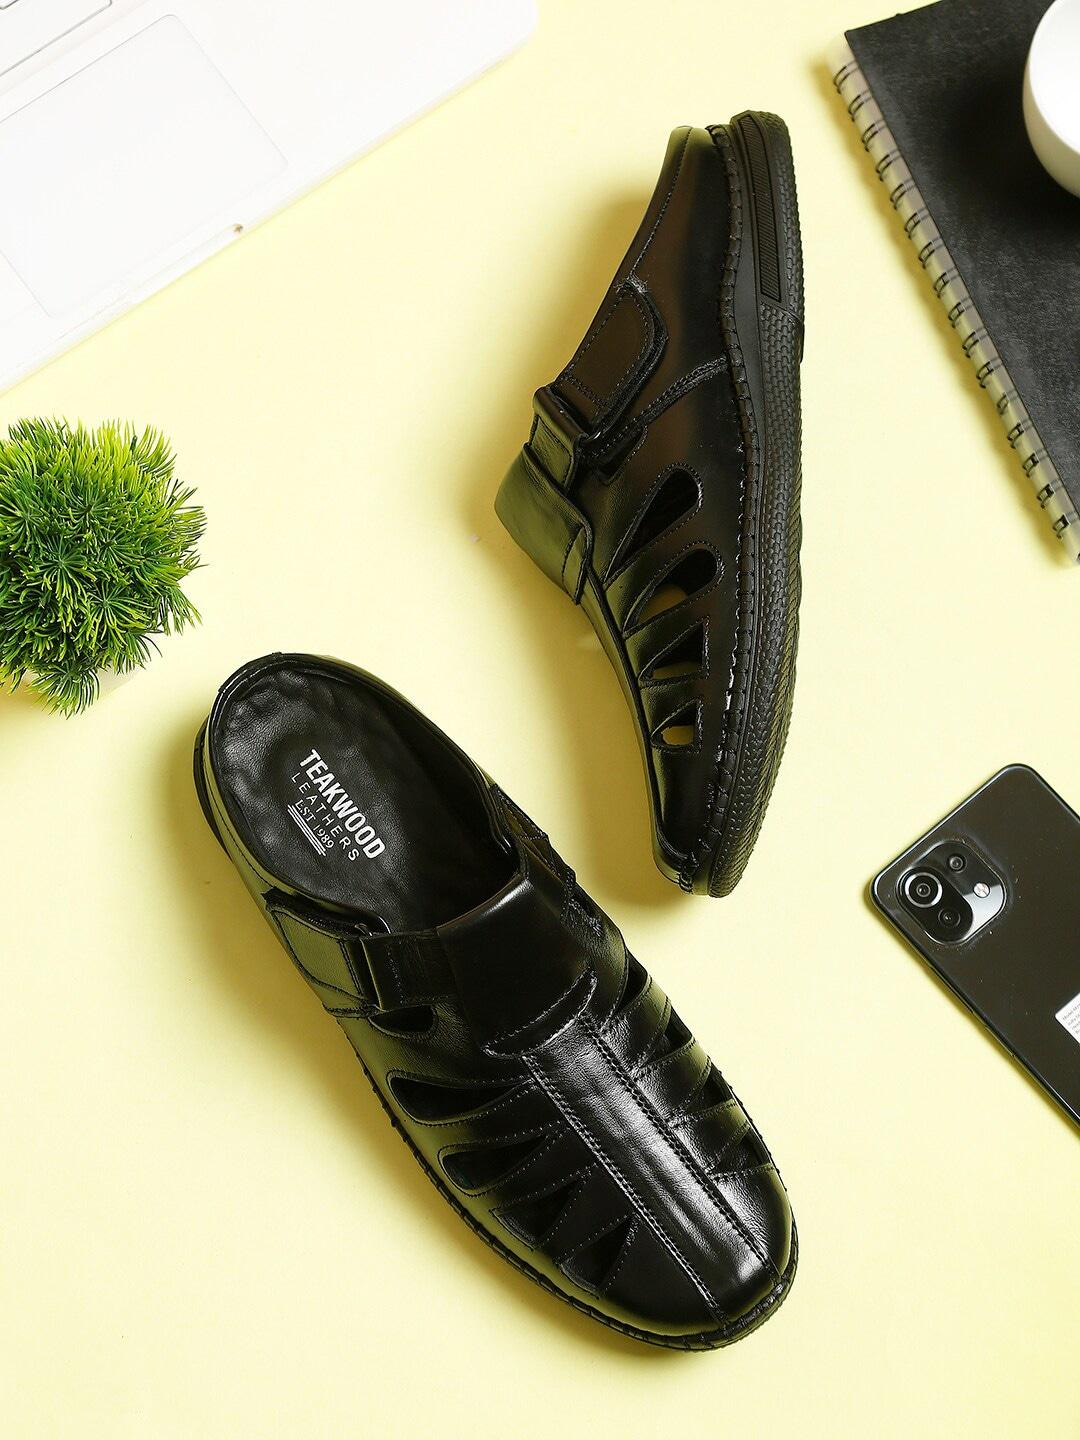 teakwood-leathers-men-black-leather-shoe-style-sandals